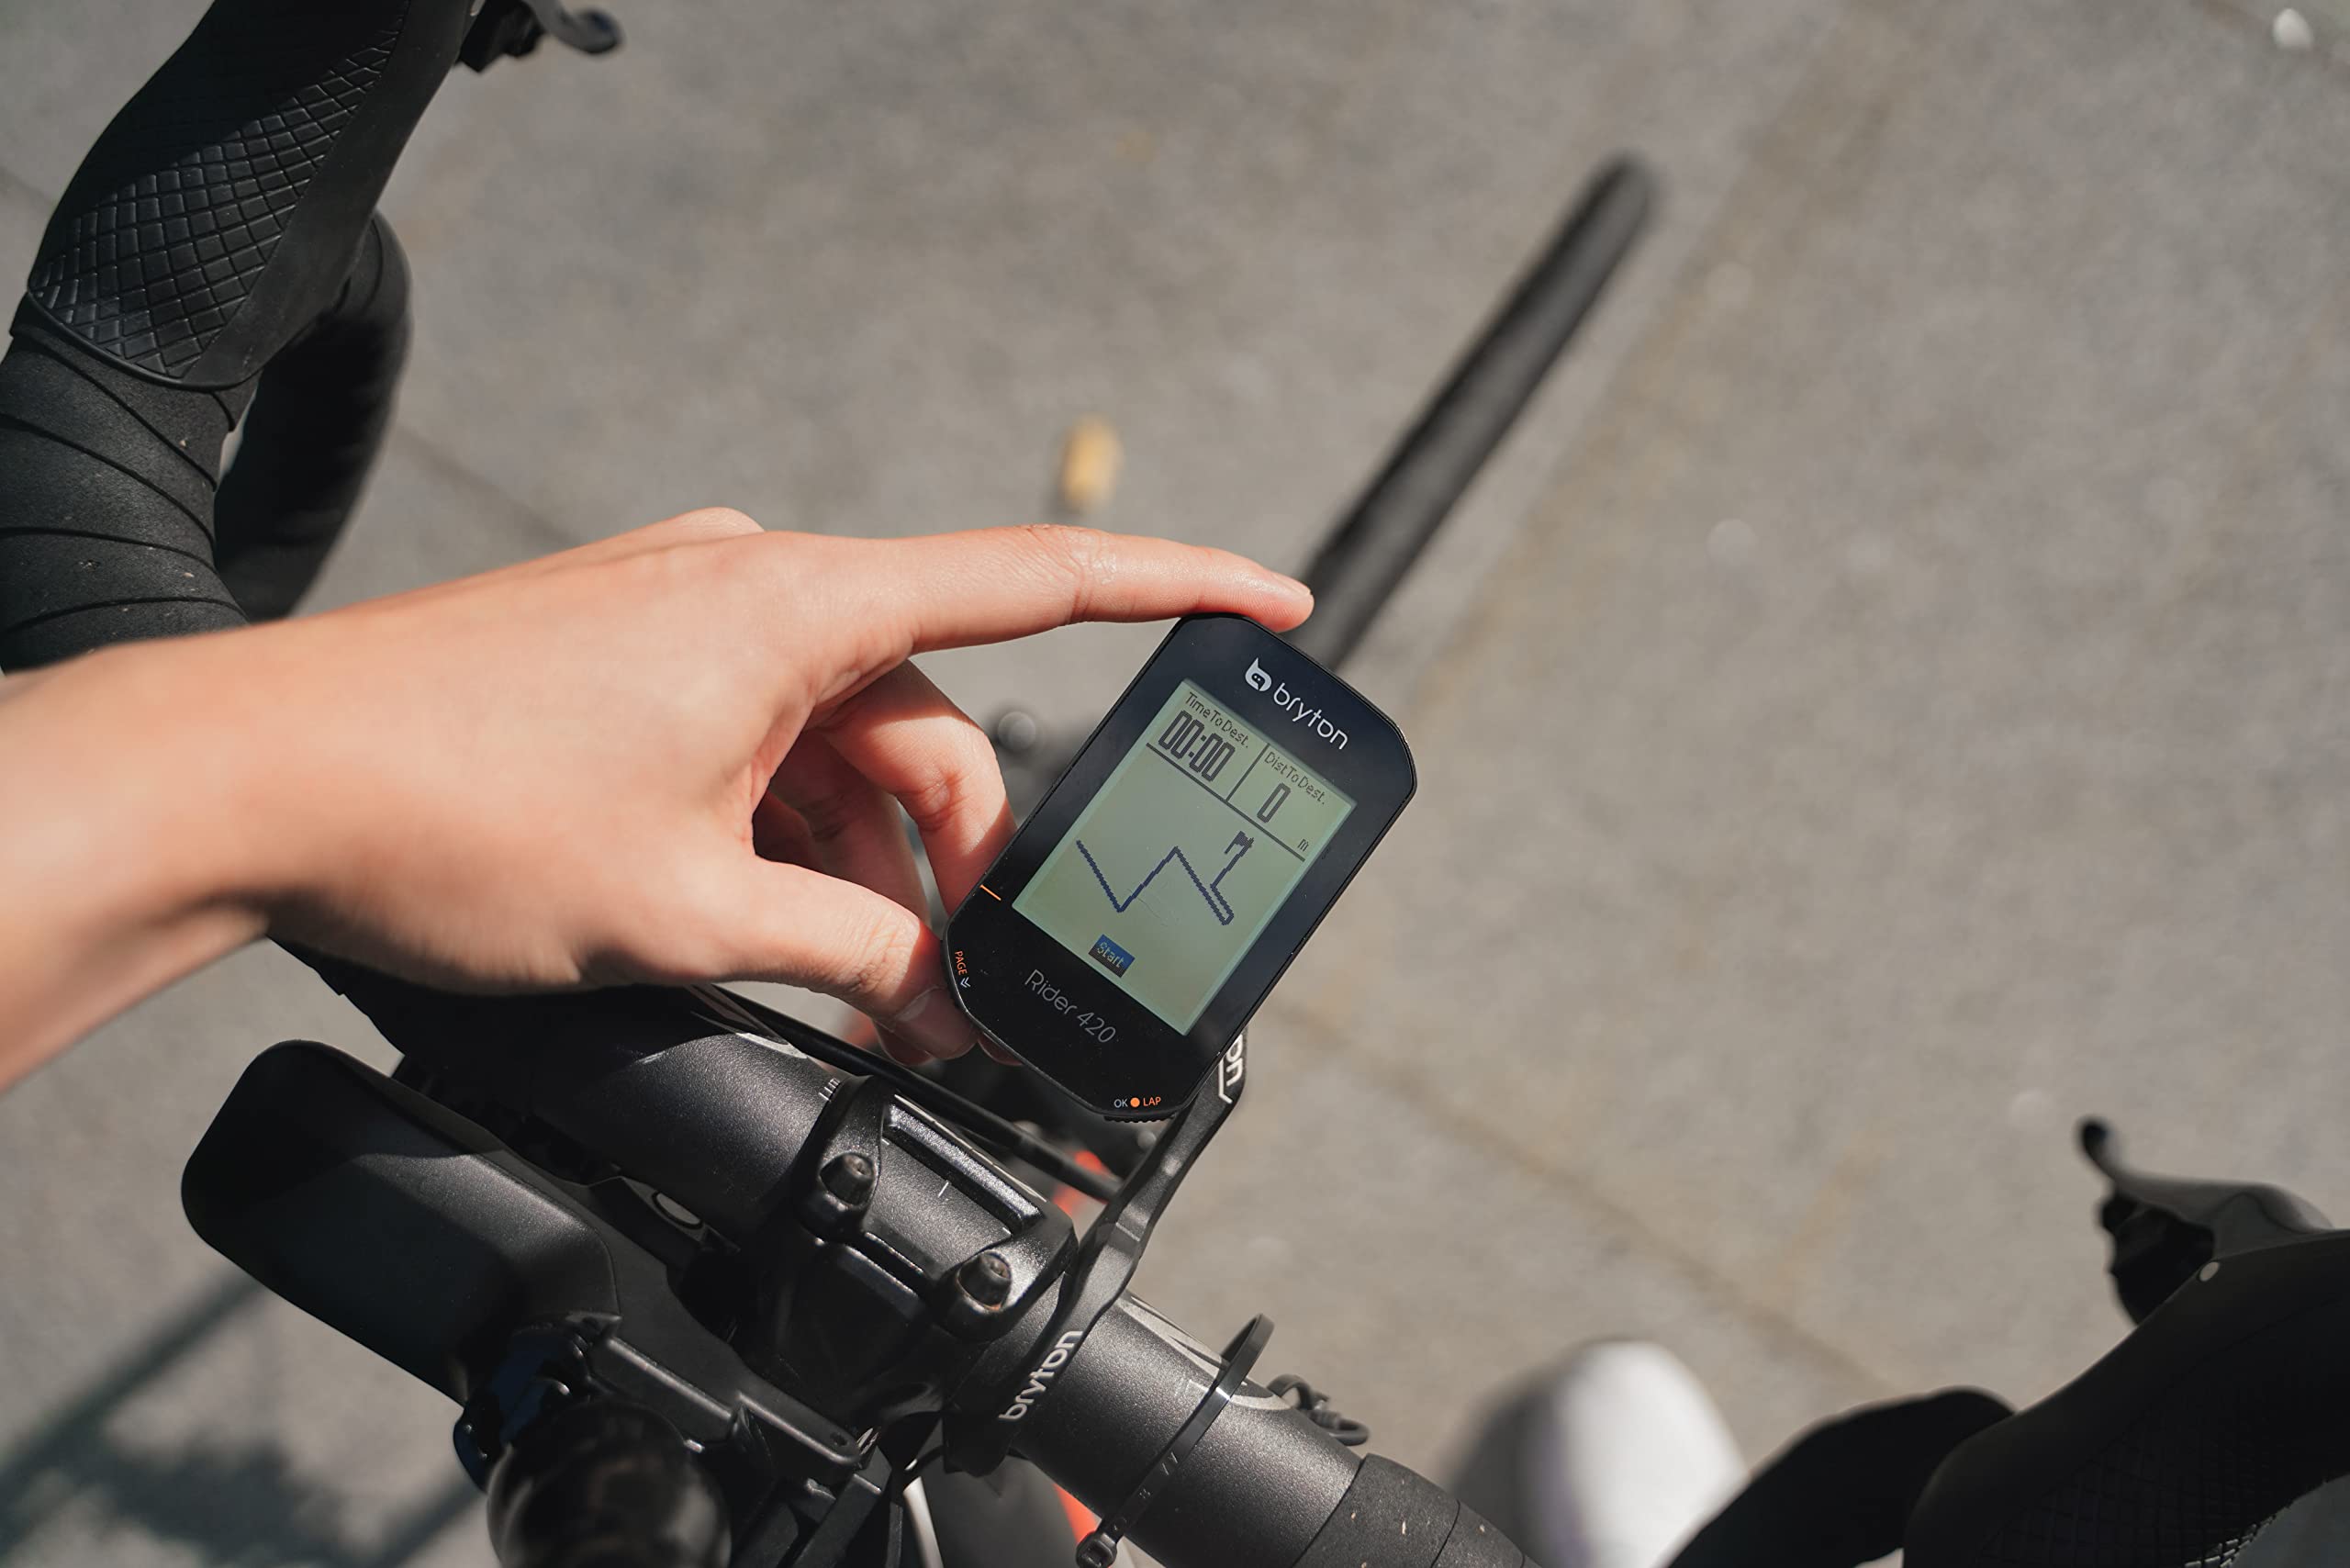 Bryton Unisex Rider 420e GPS Cycle Cycling Computer, Black, 83.9x49.9x16.9 UK